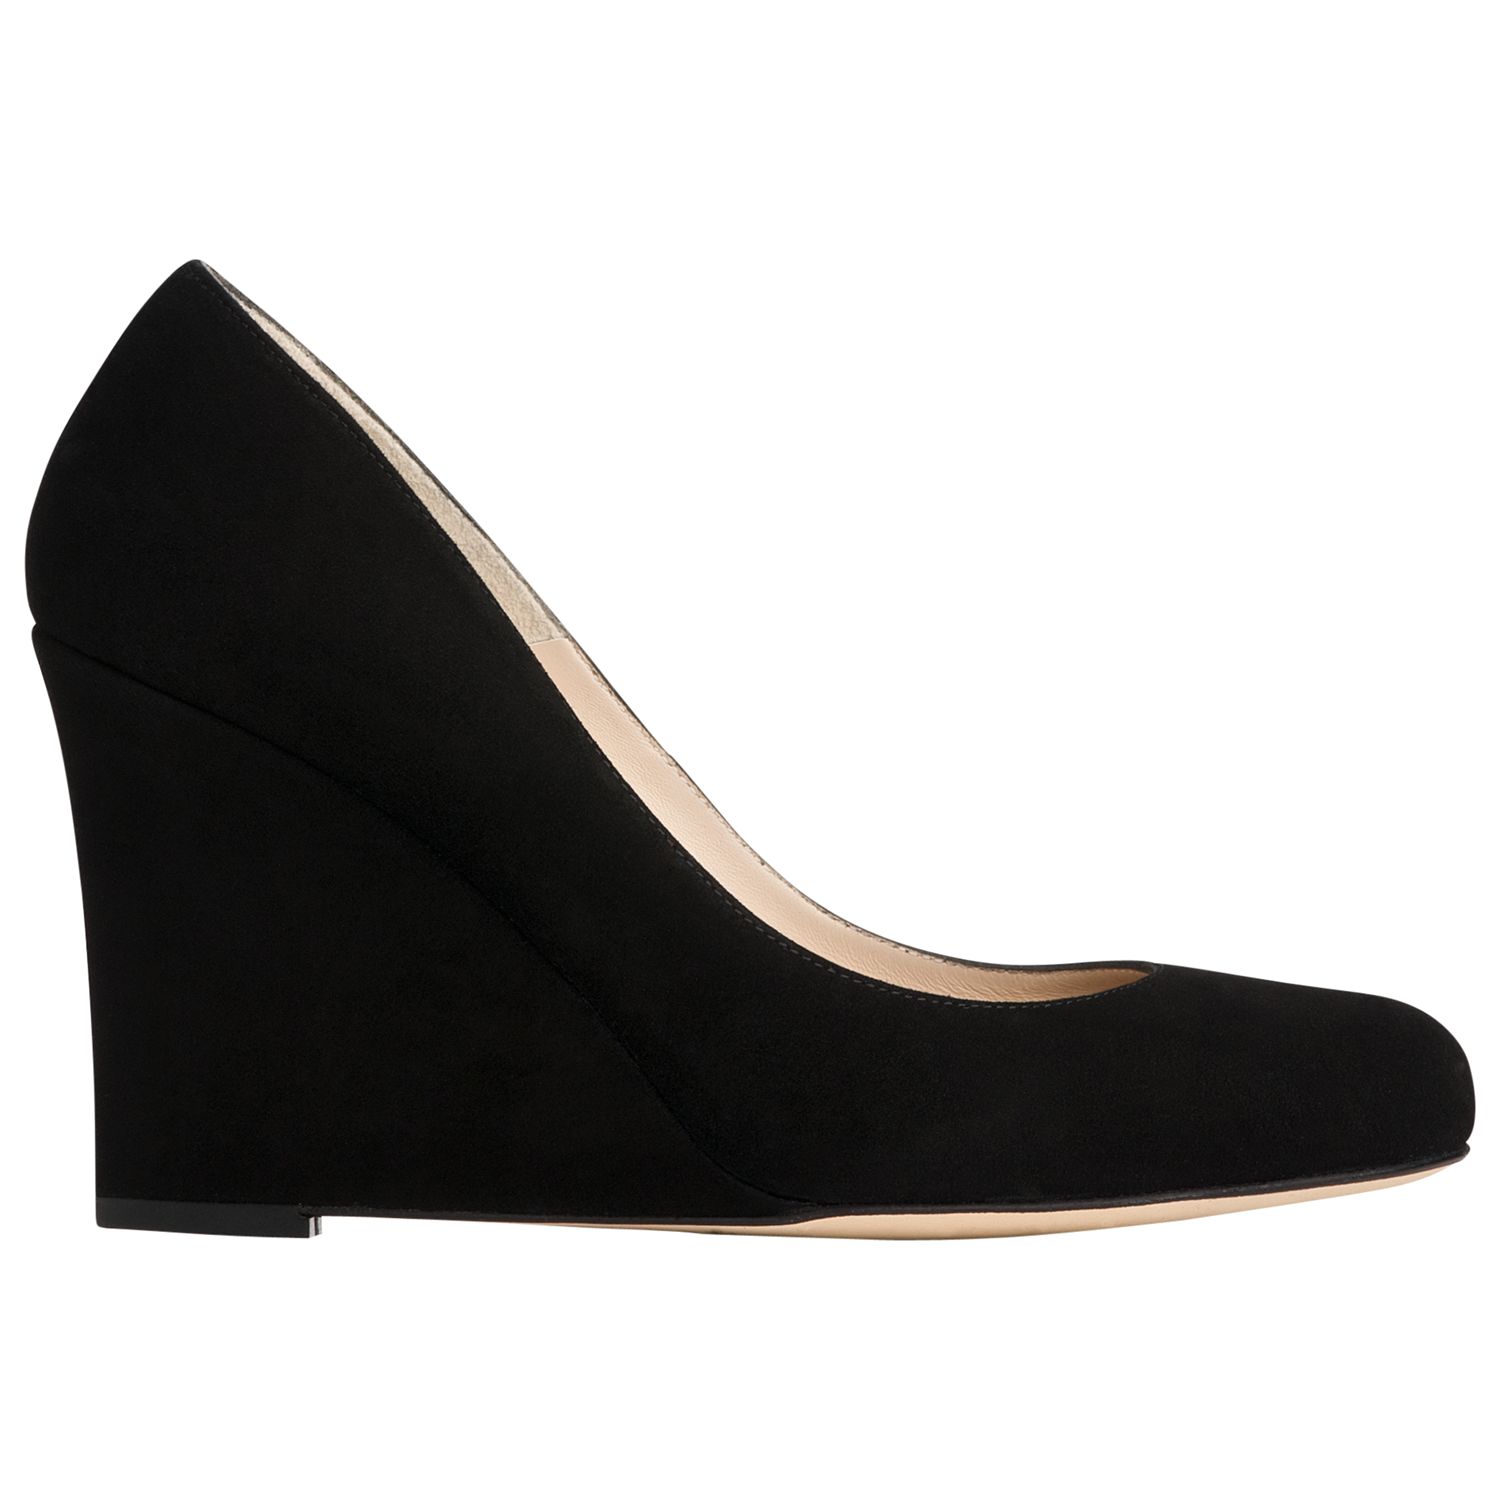 L.K. Bennett Eirene Wedge Court Shoes, Black Suede